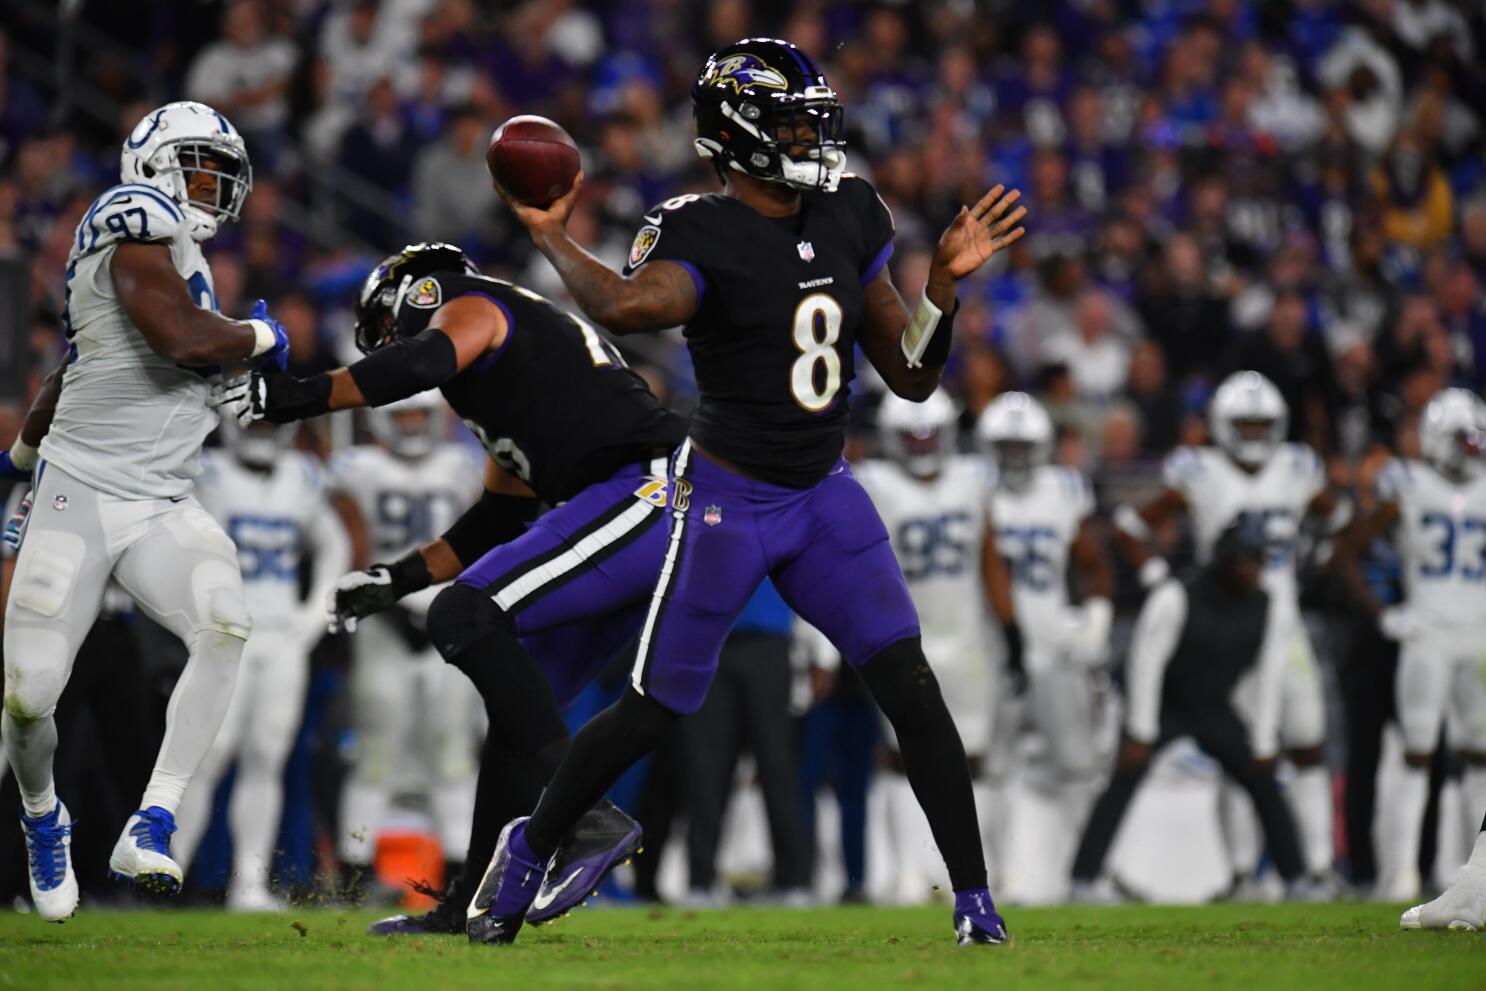 NFL: Lamar Jackson leads Ravens back to overtime win over Colts